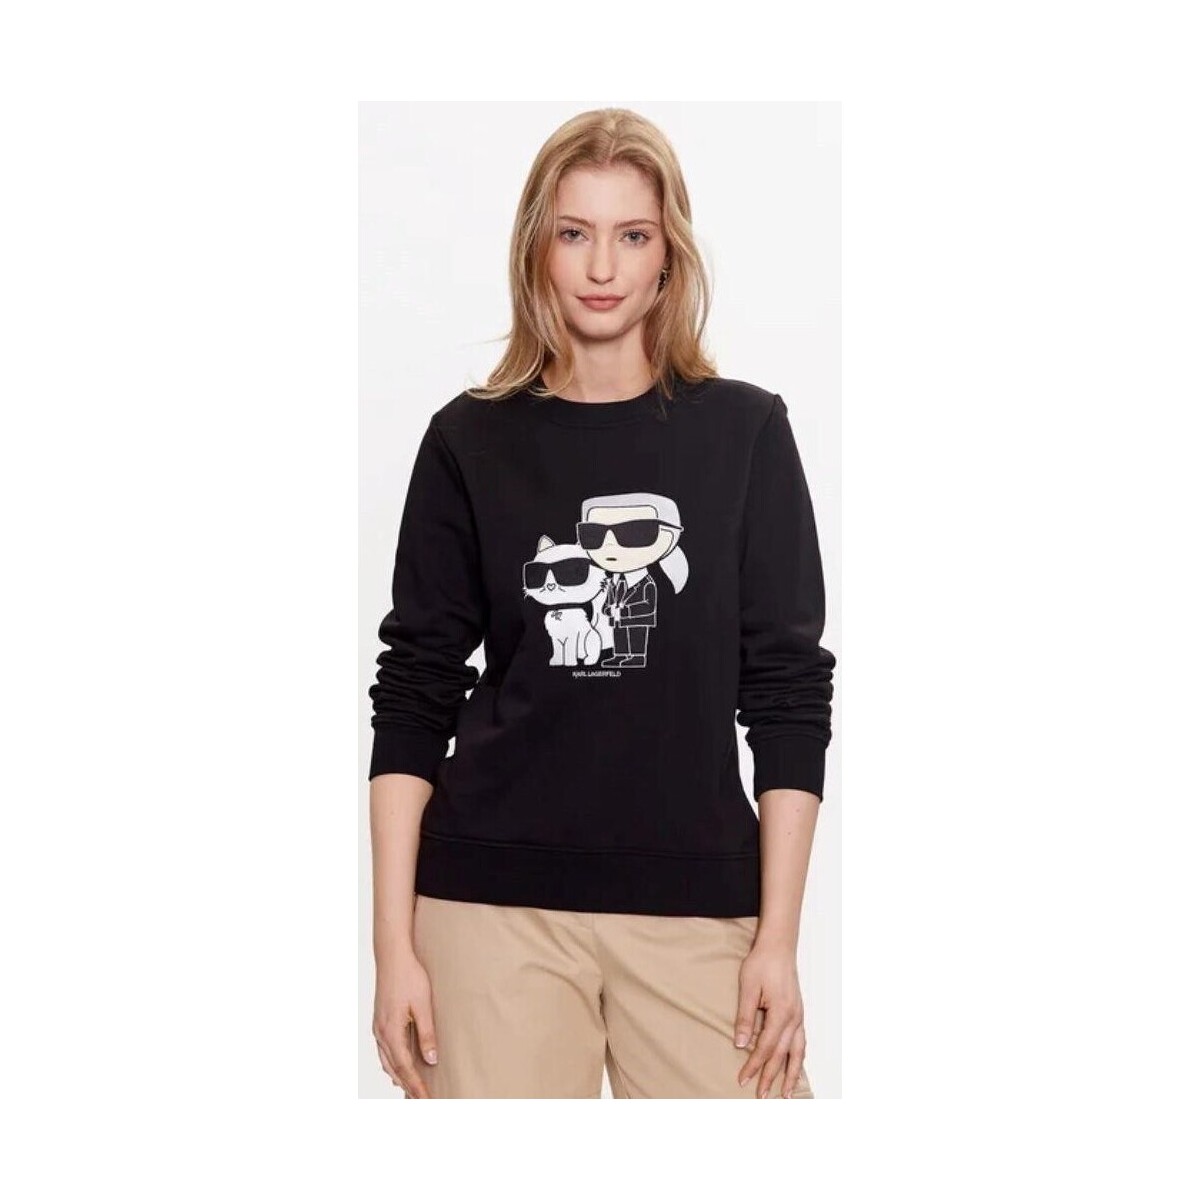 Textiel Dames Sweaters / Sweatshirts Karl Lagerfeld 230W1803 IKONIK 2.0 Zwart